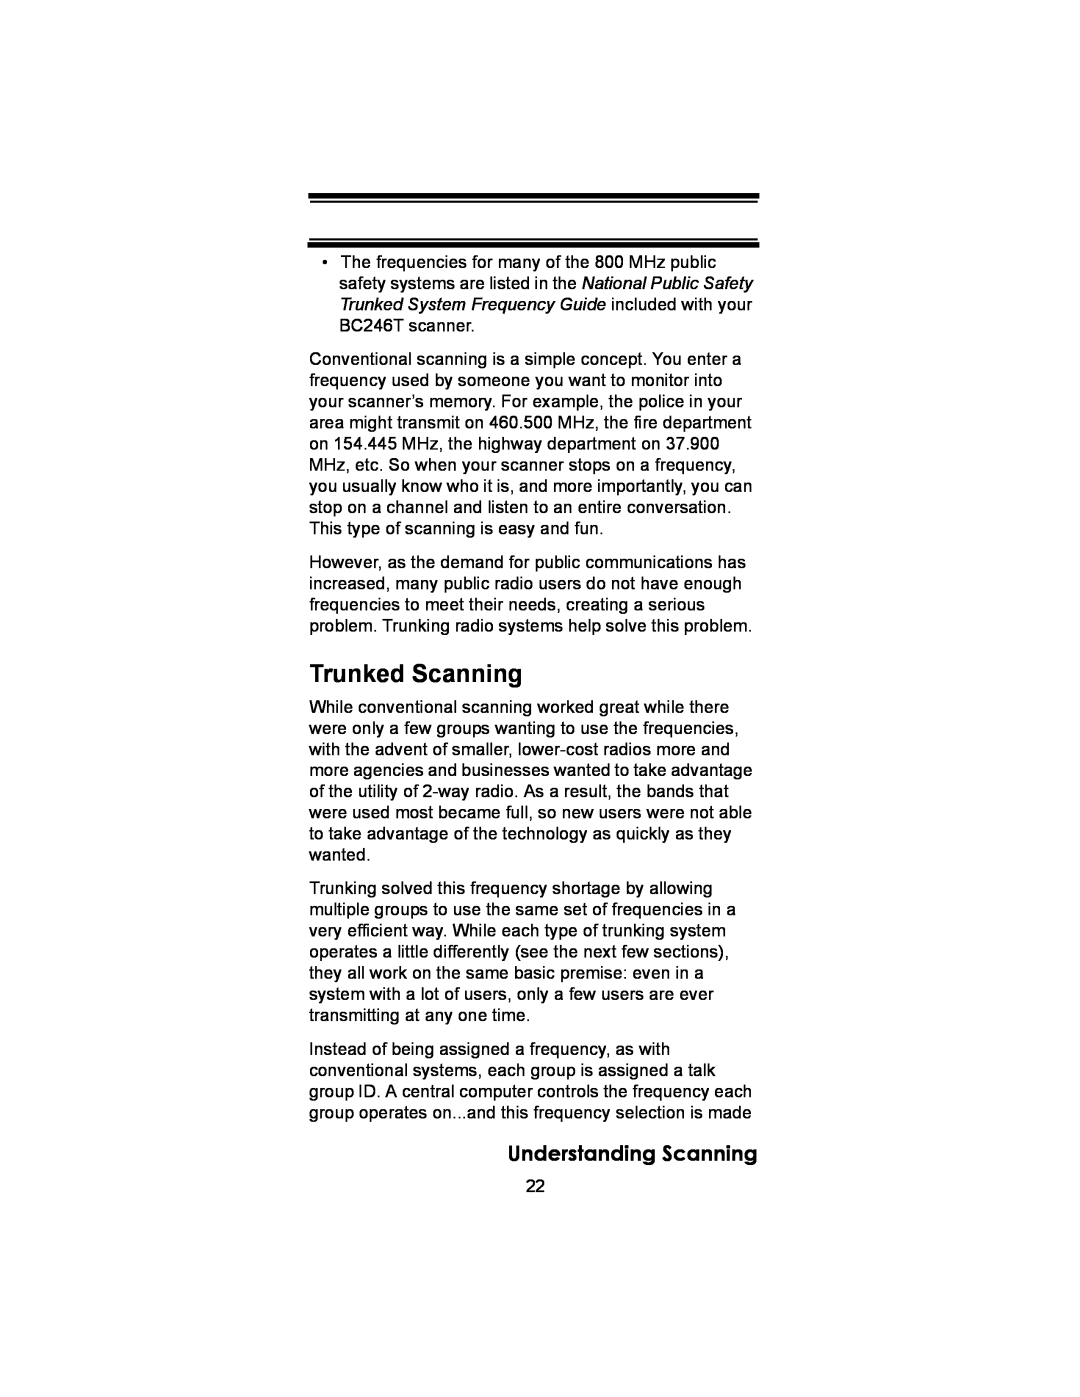 Uniden BC246T owner manual Trunked Scanning, Understanding Scanning 